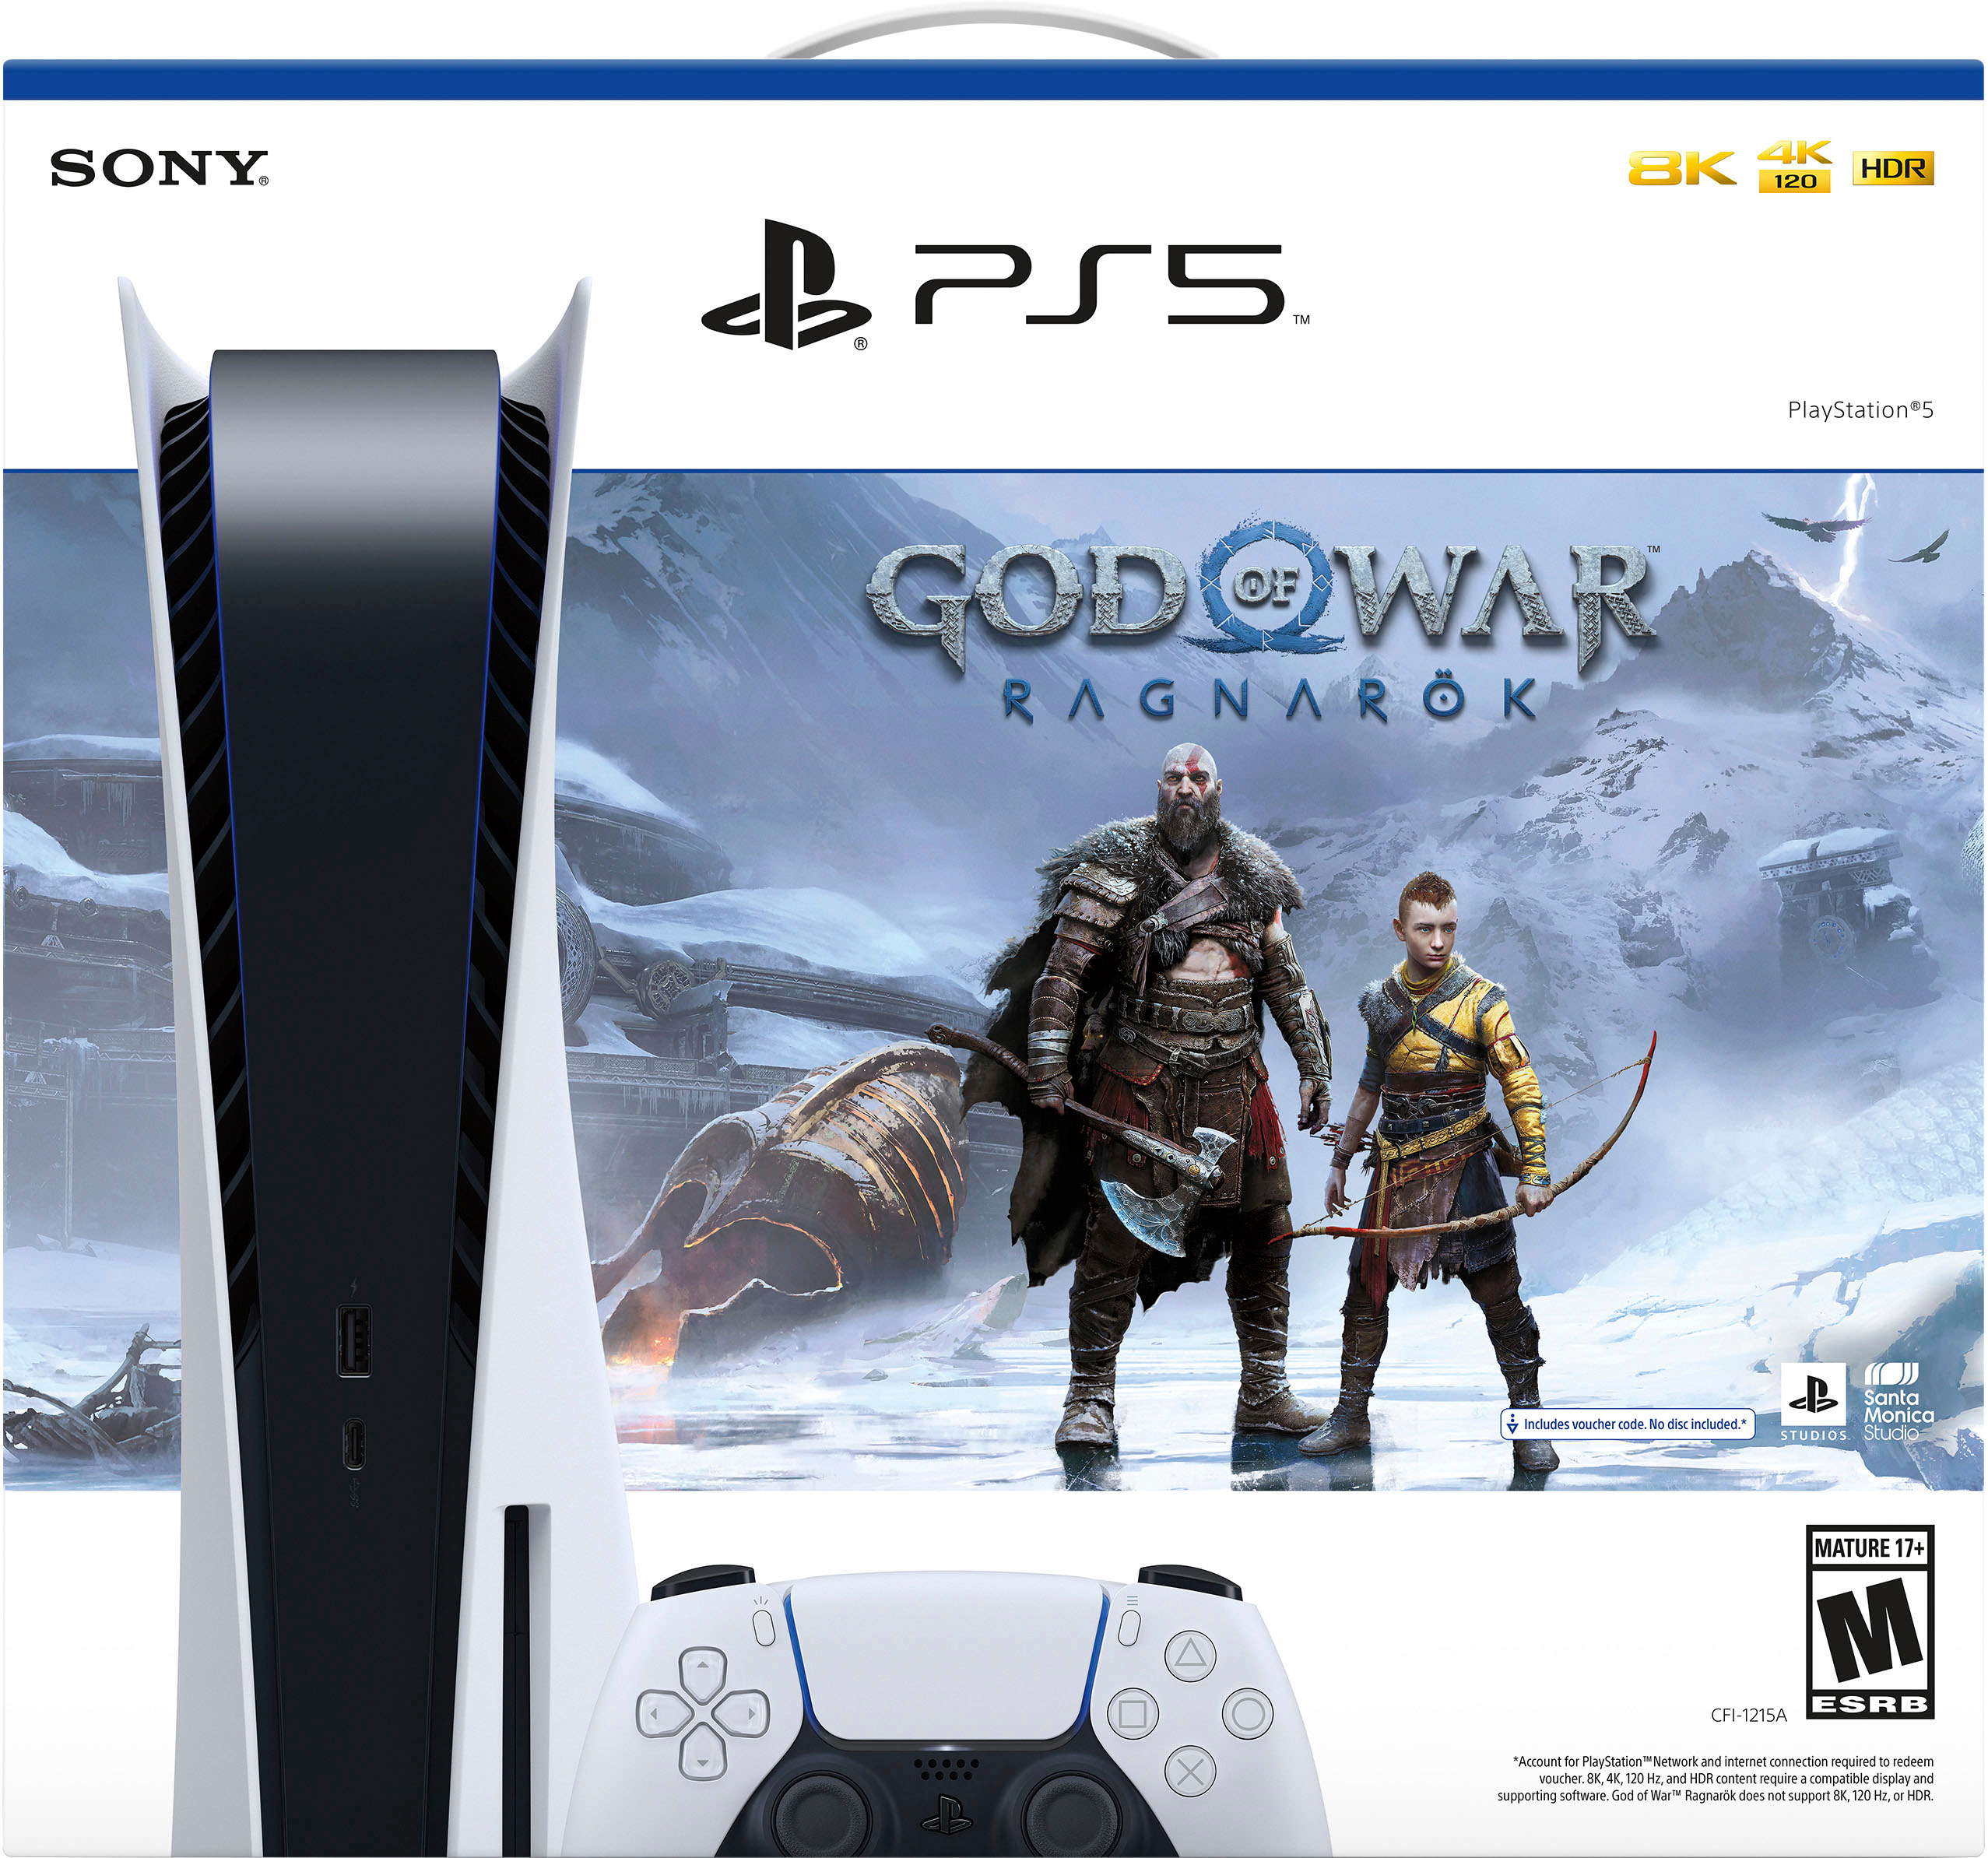 Is God of War Ragnarok worth buying on base PlayStation 4?